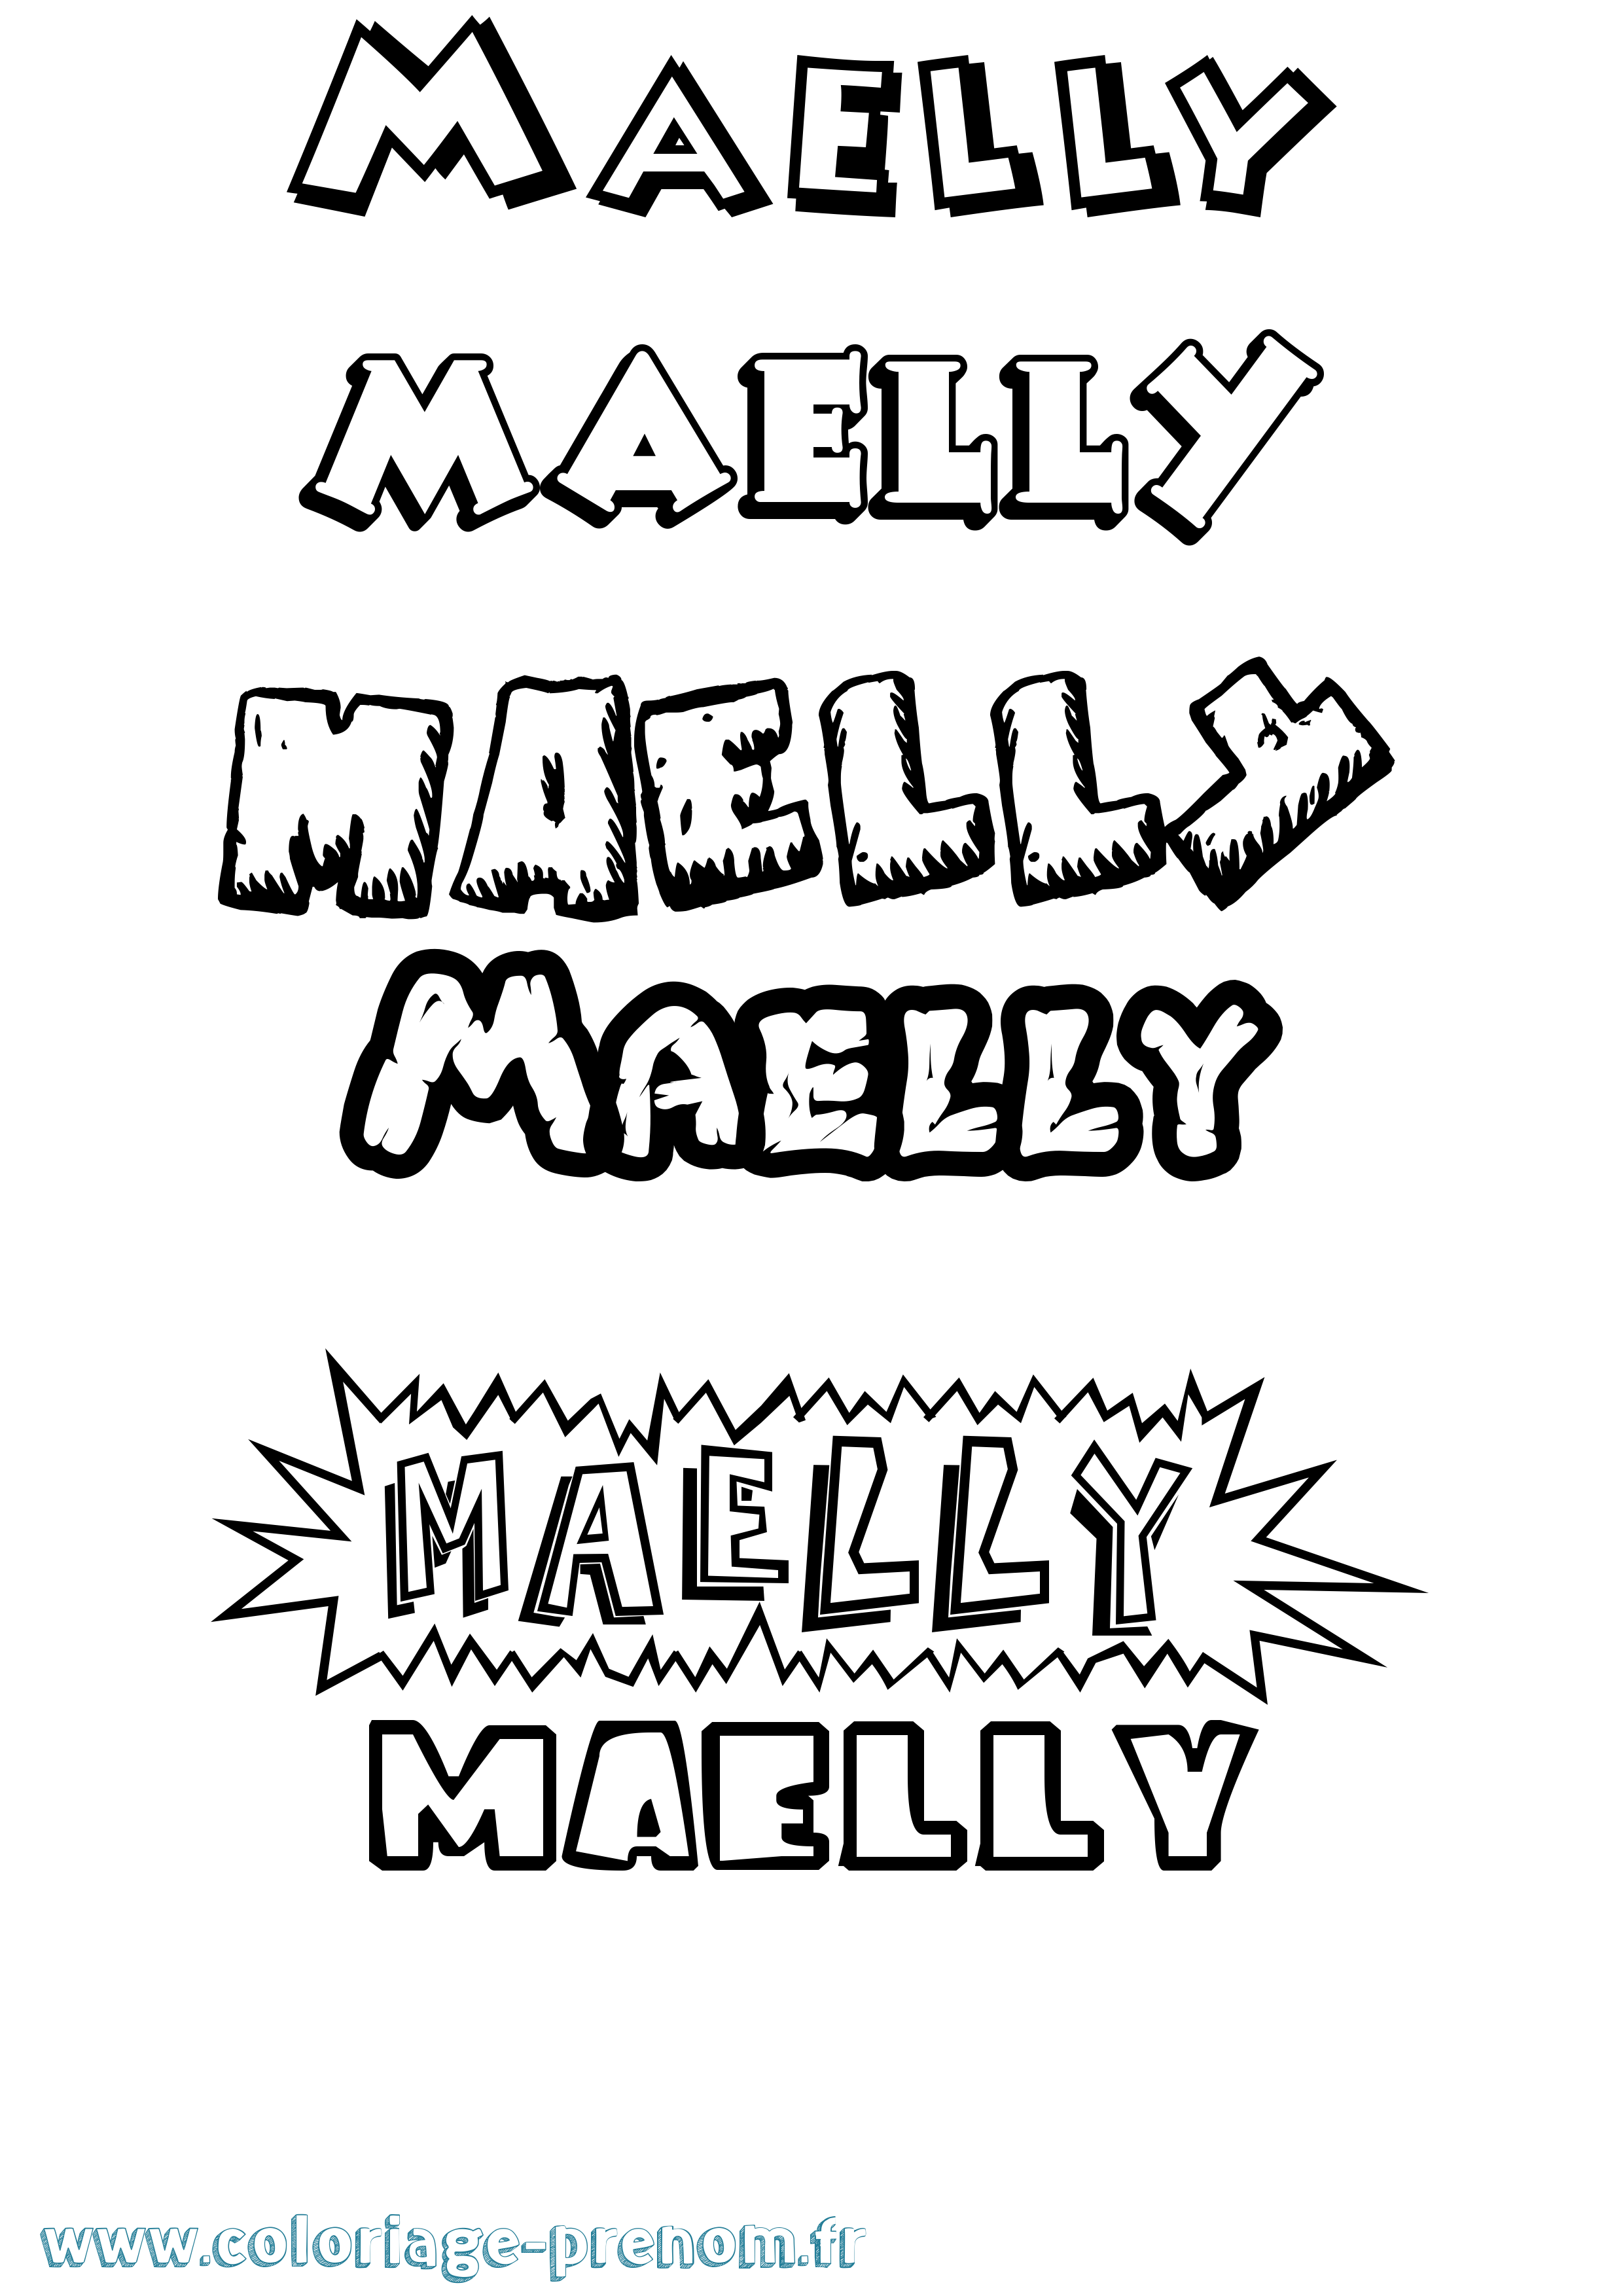 Coloriage prénom Maelly Dessin Animé